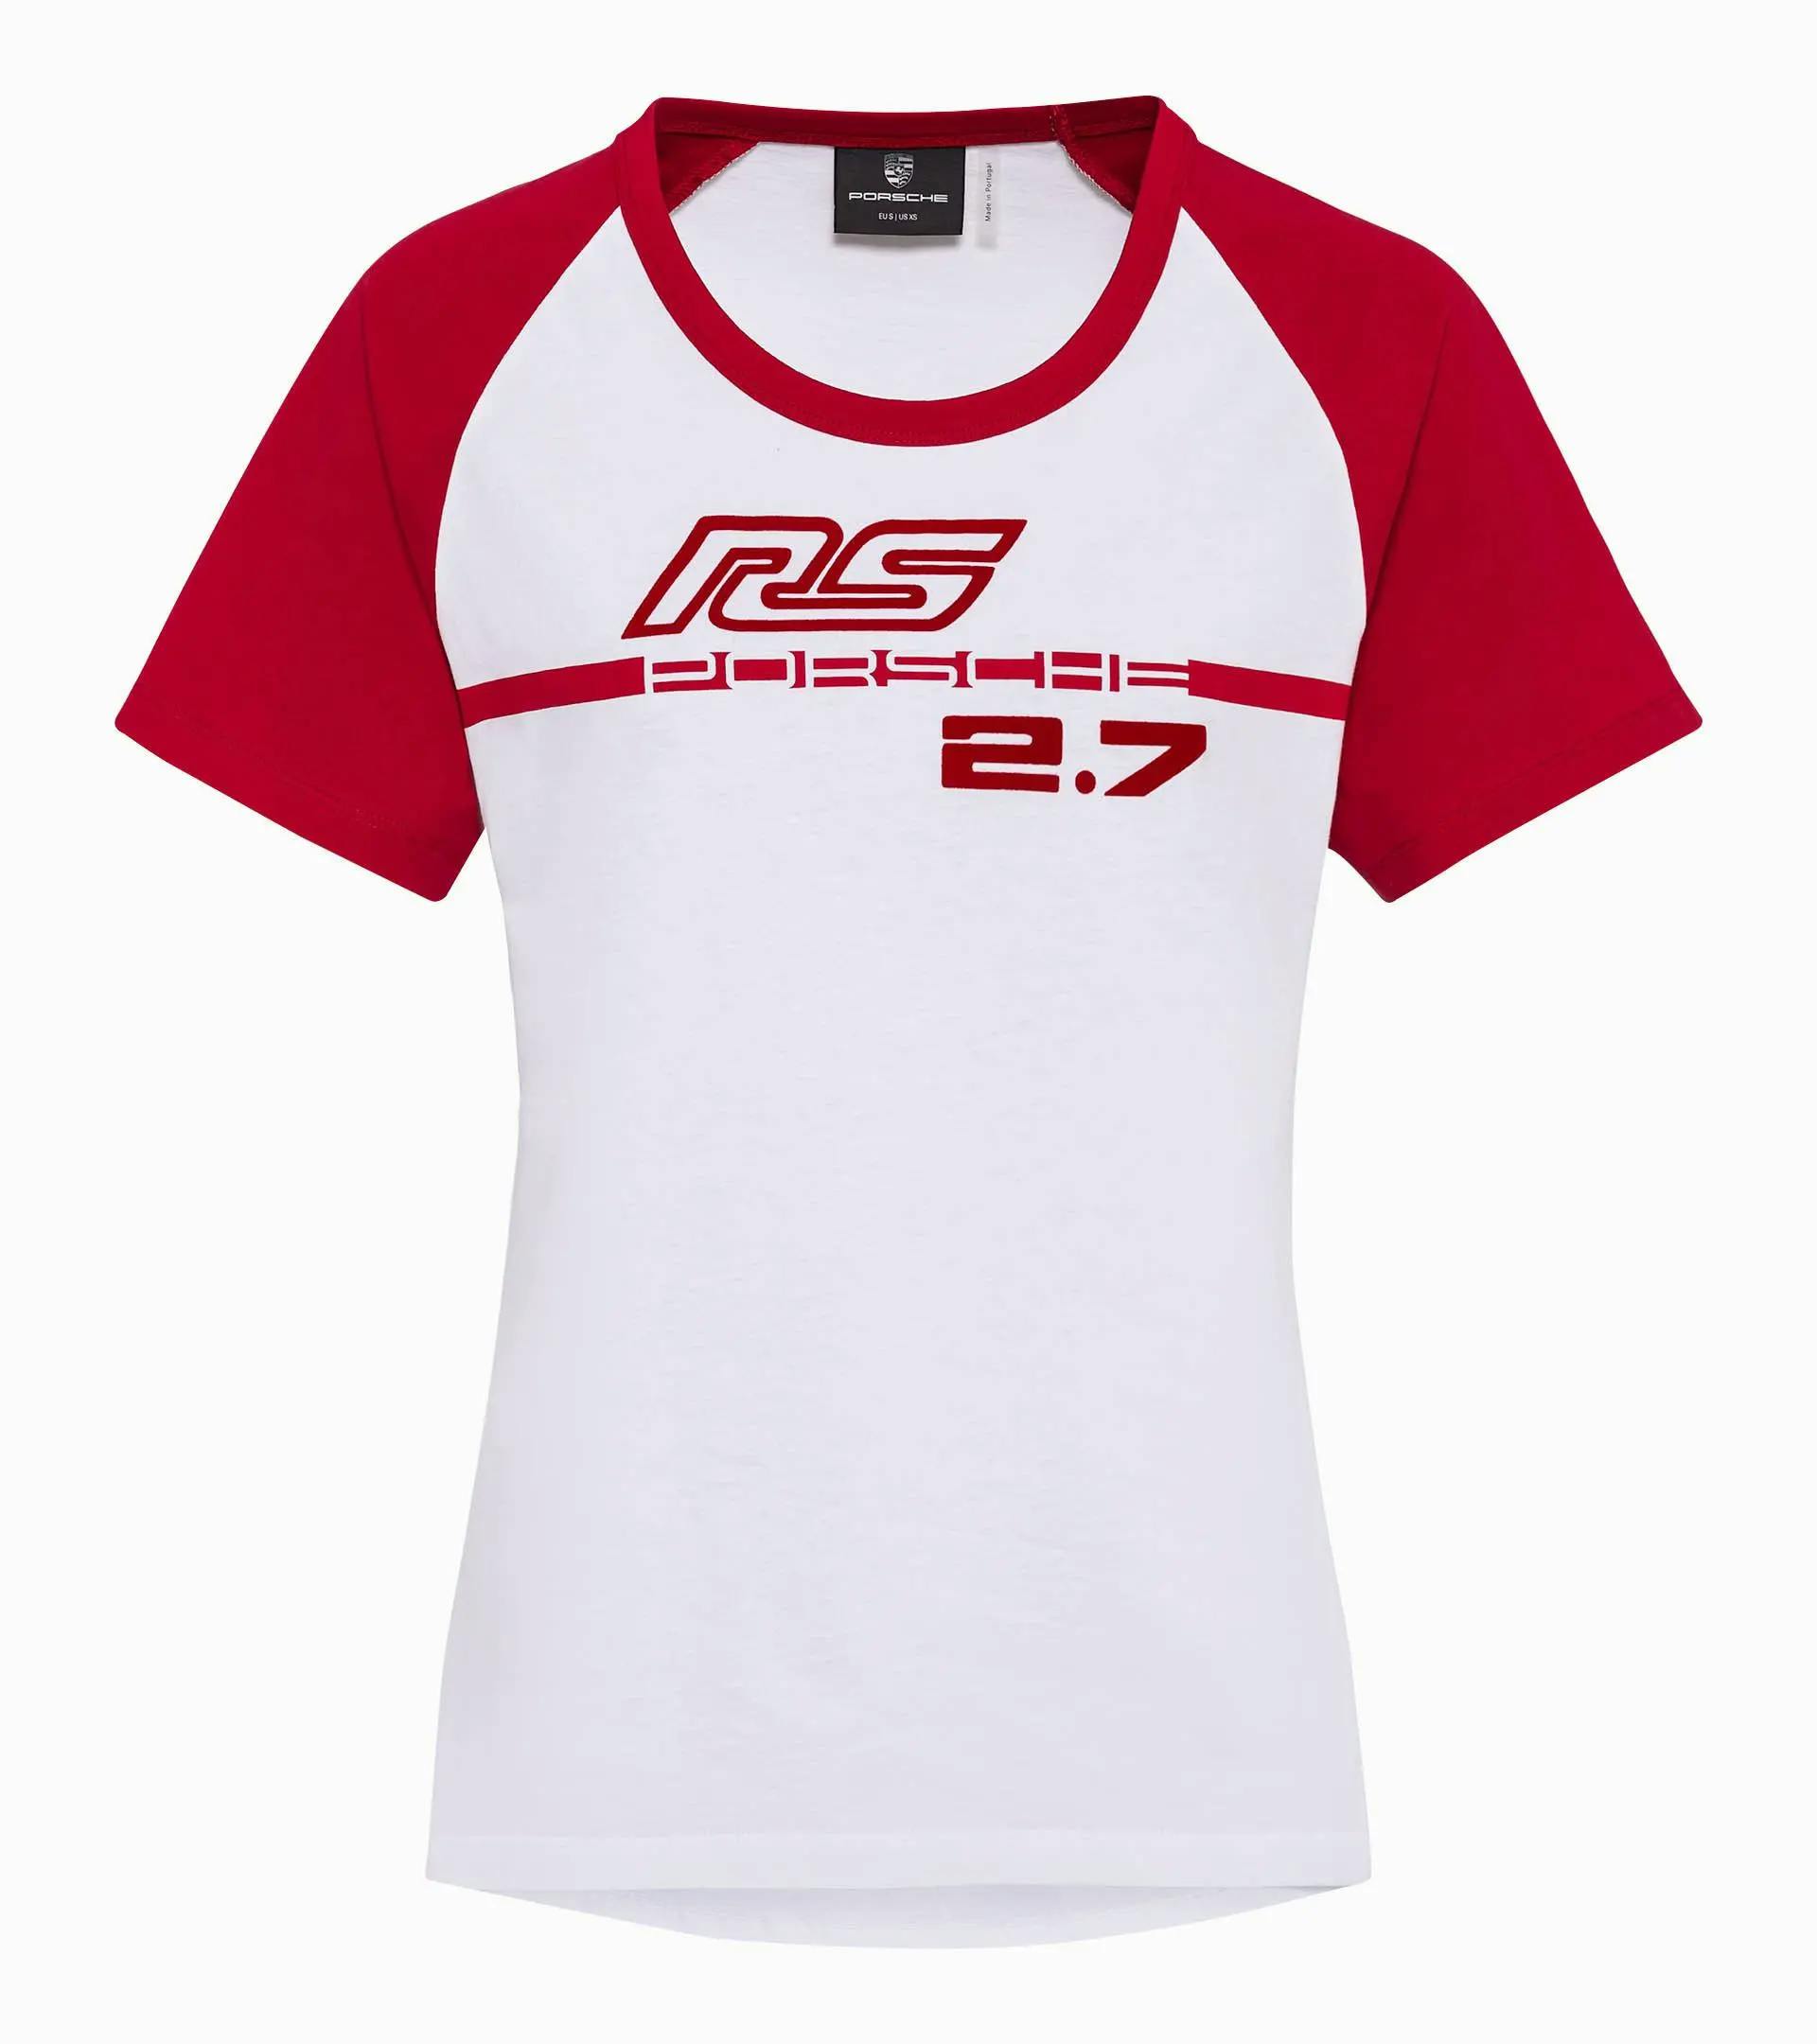 Ladies' T-shirt – RS 2.7 1